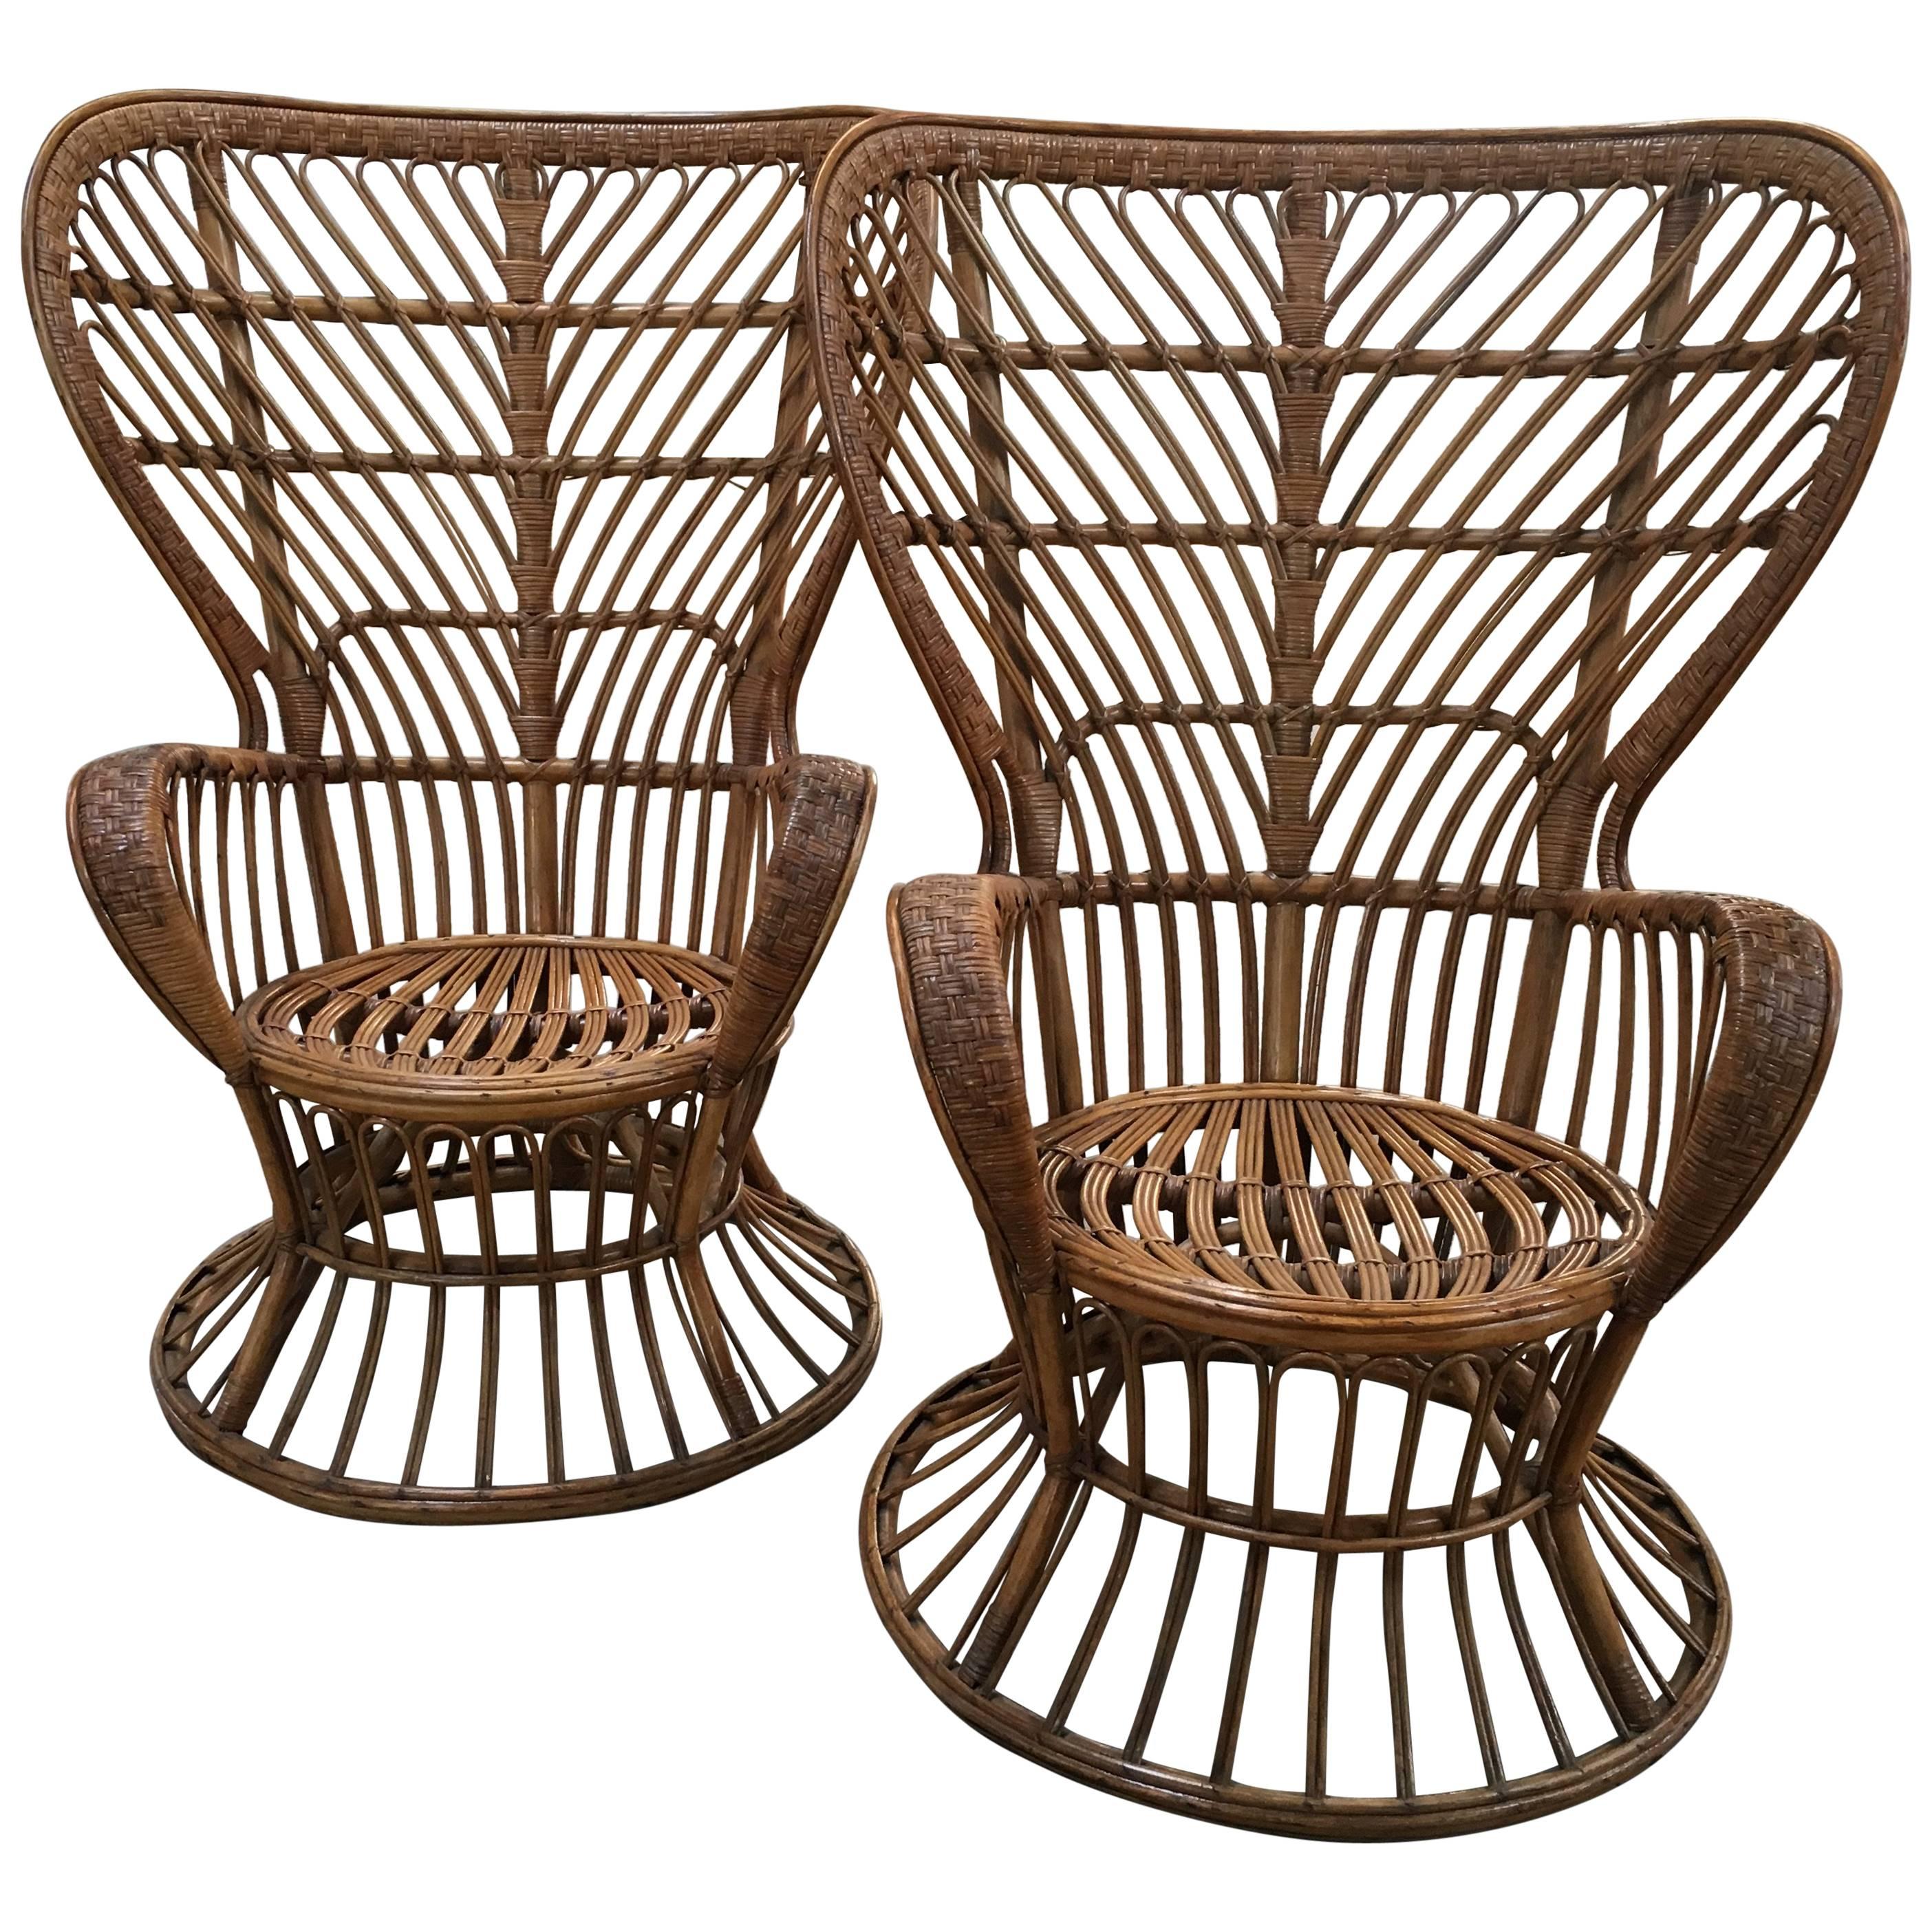 Pair of Italian Rattan Chairs from 1940s by Lio Carminati for Bonacina